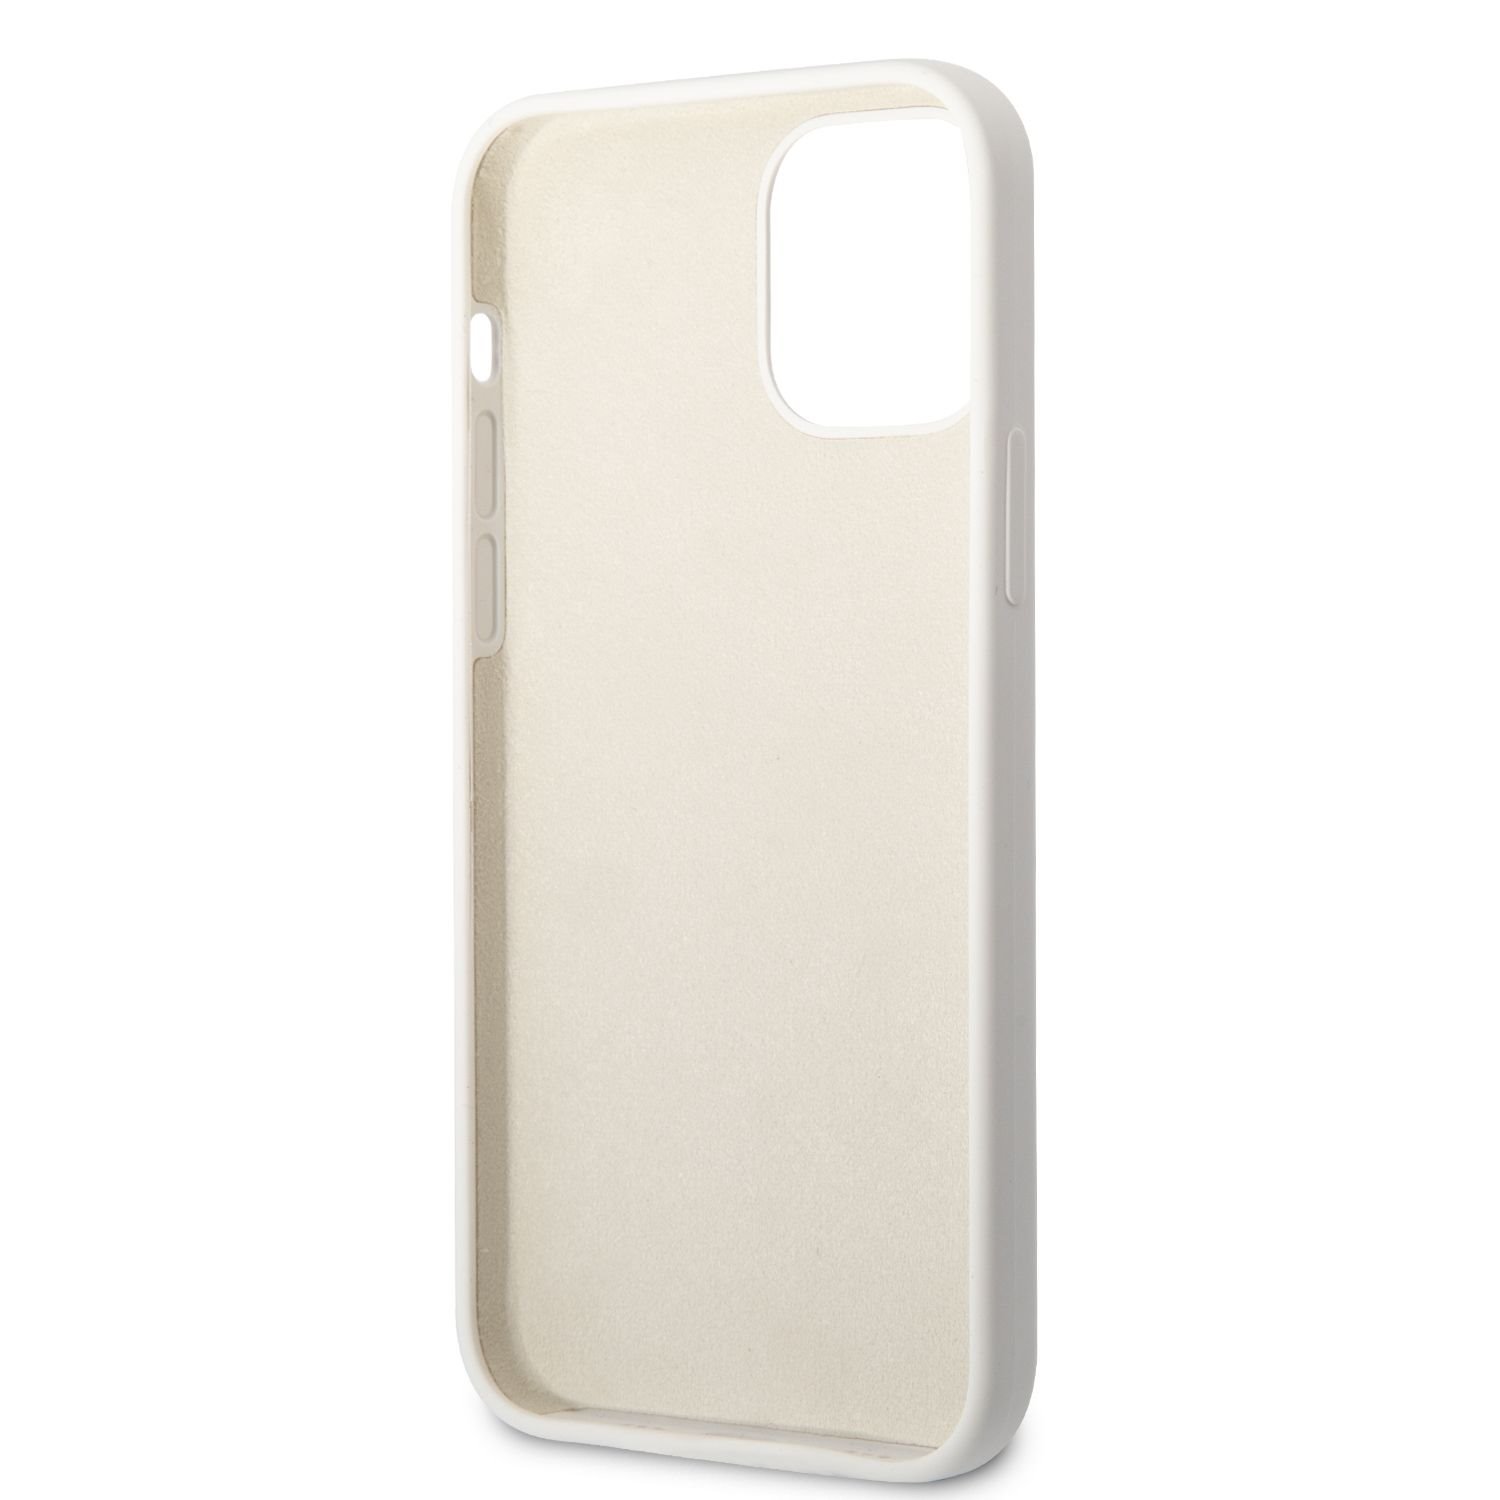 Karl Lagerfeld Liquid Silicone Ikonik NFT Zadní Kryt pro iPhone 12/12 Pro White